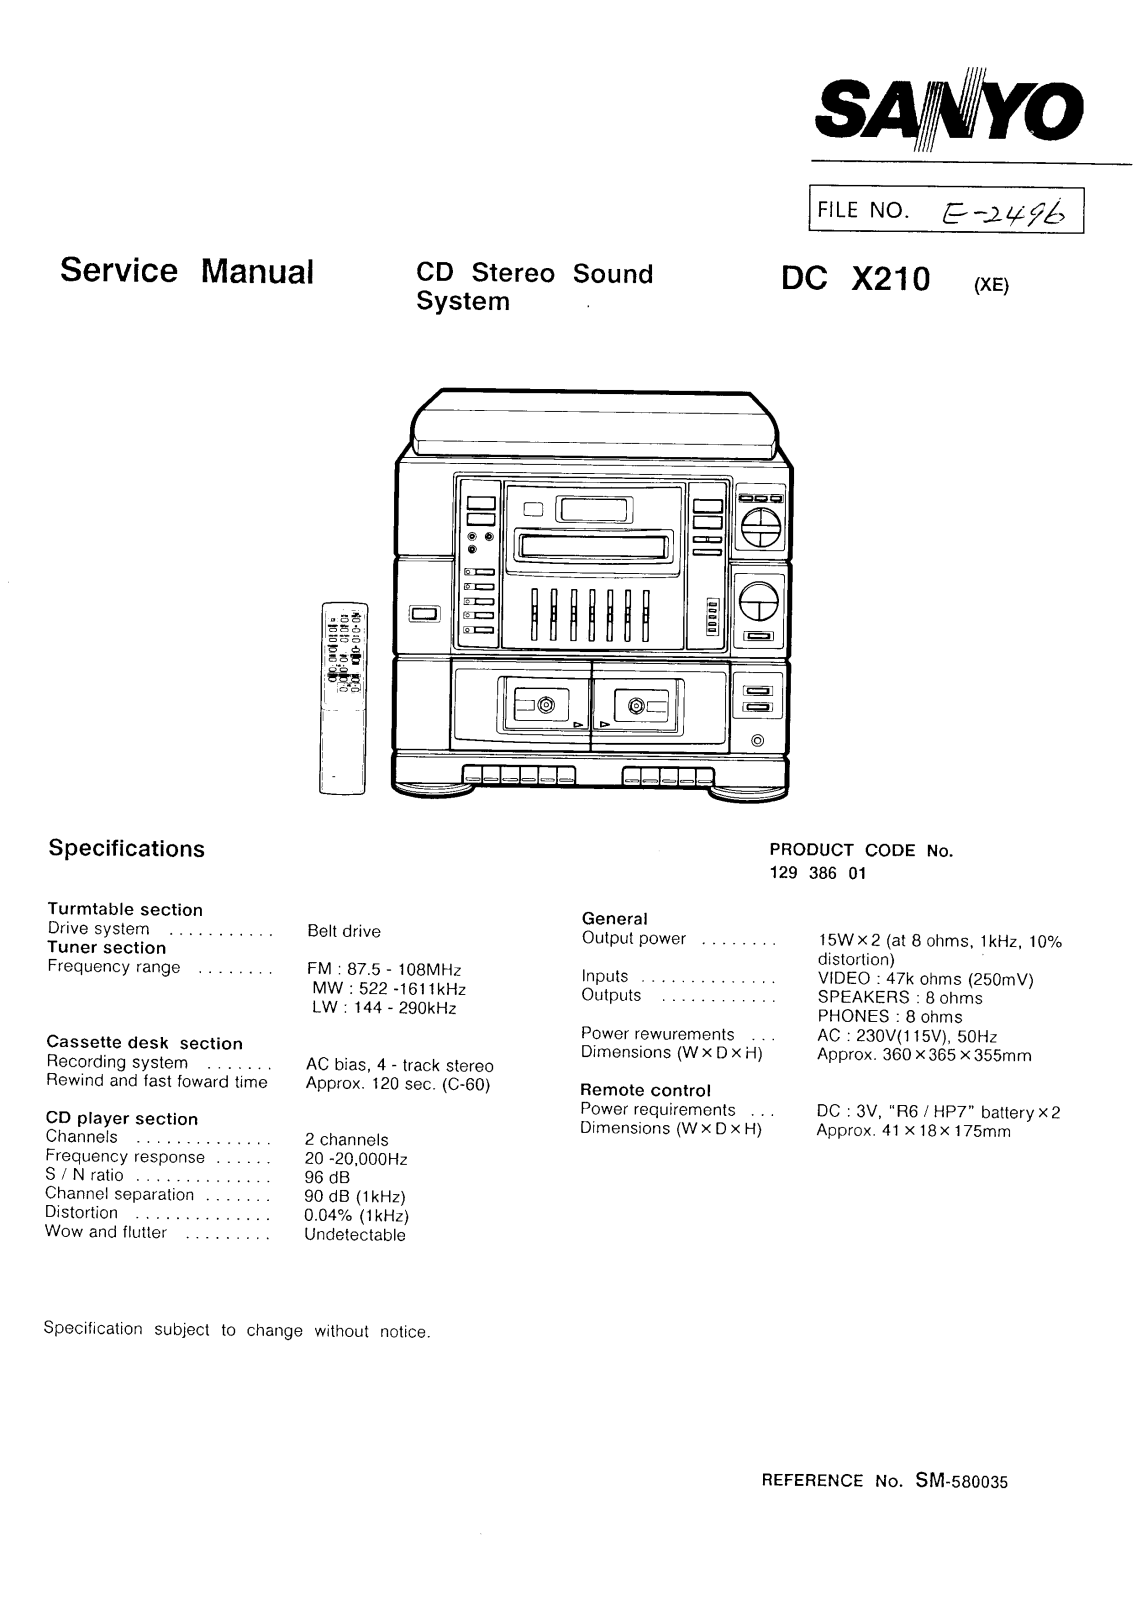 Sanyo DCX-210 Service manual